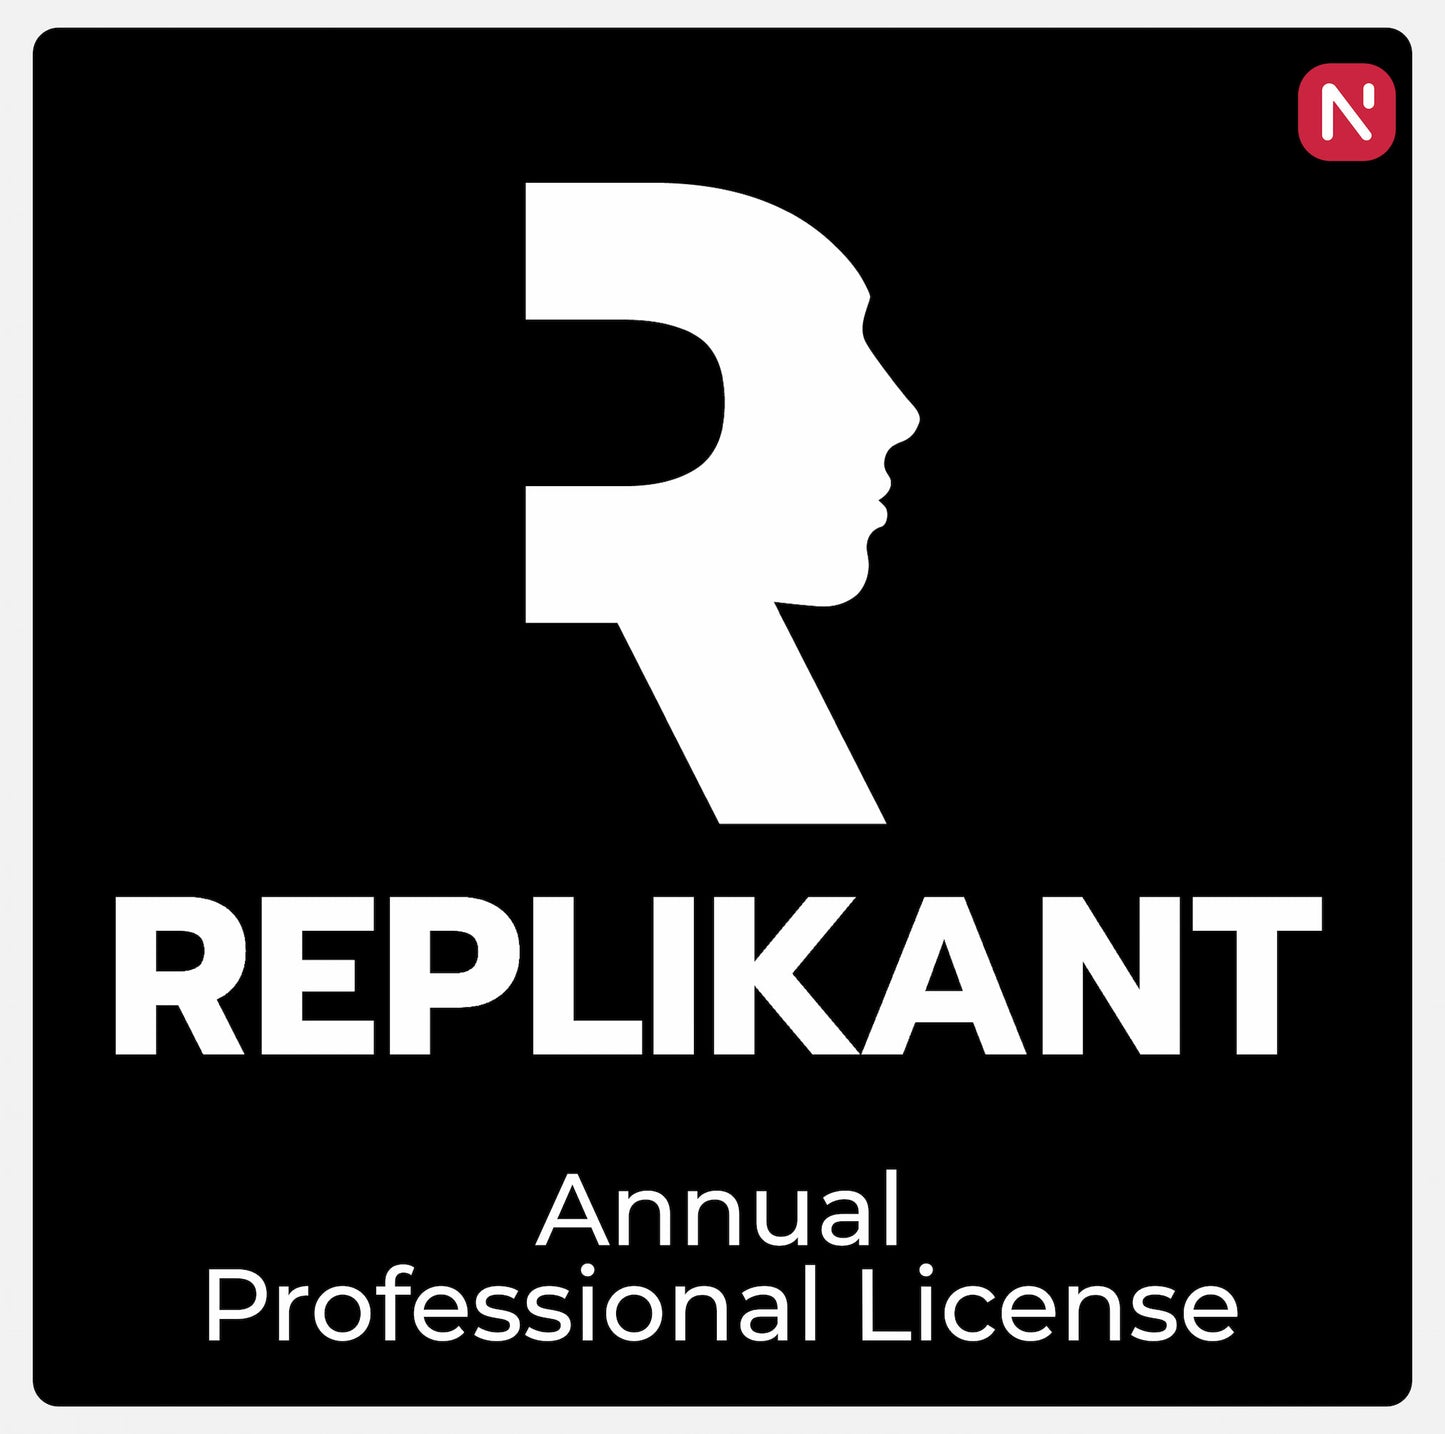 REPLIKANT (Annual Professional License) for Perception Neuron Noitom International, Inc